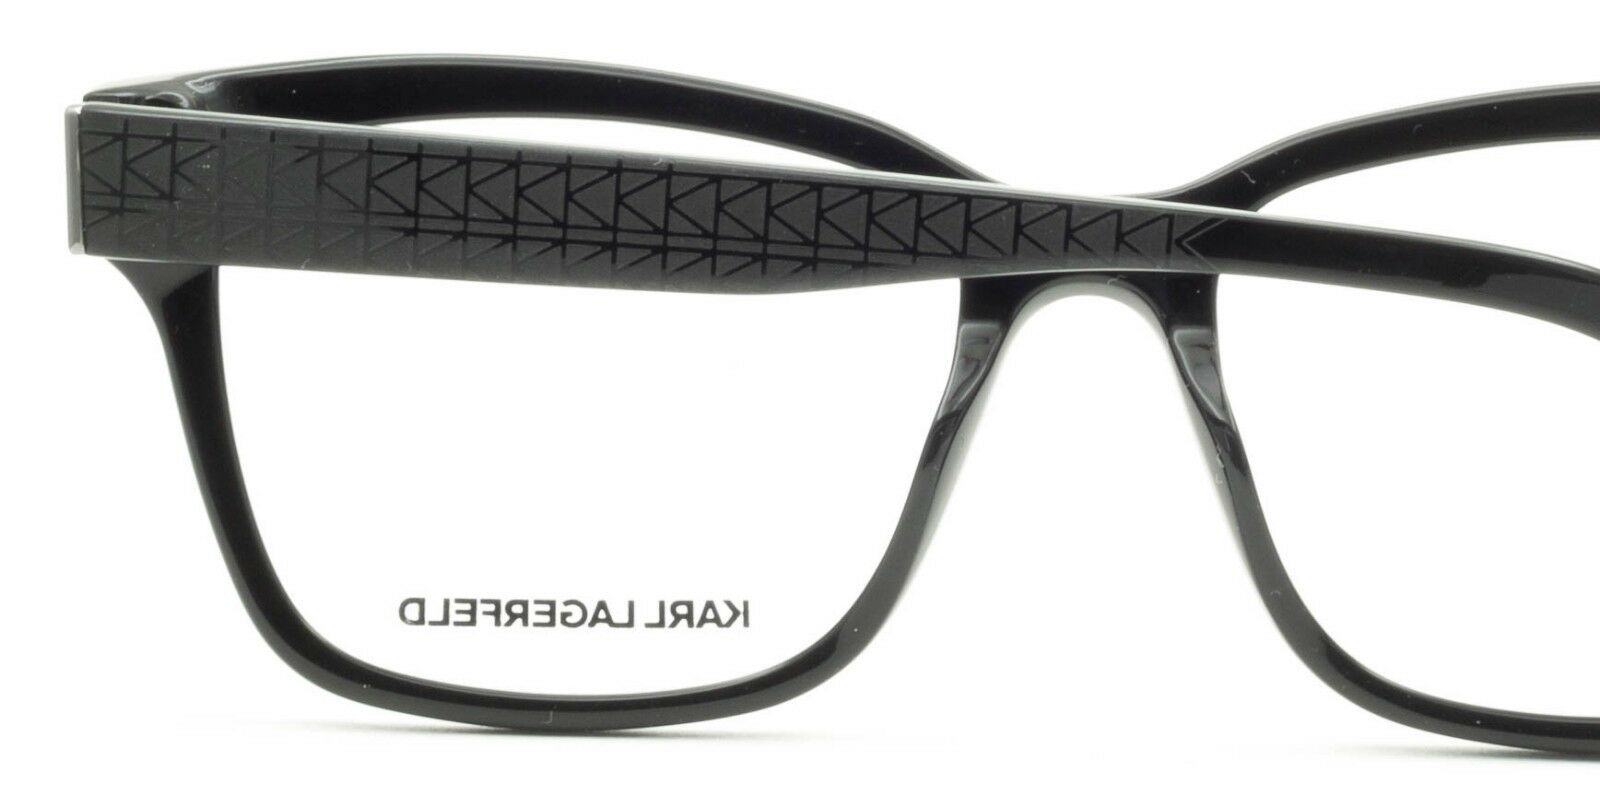 KARL LAGERFELD KL 42 52mm Eyewear FRAMES RX Eyeglasses - New - GGV Eyewear